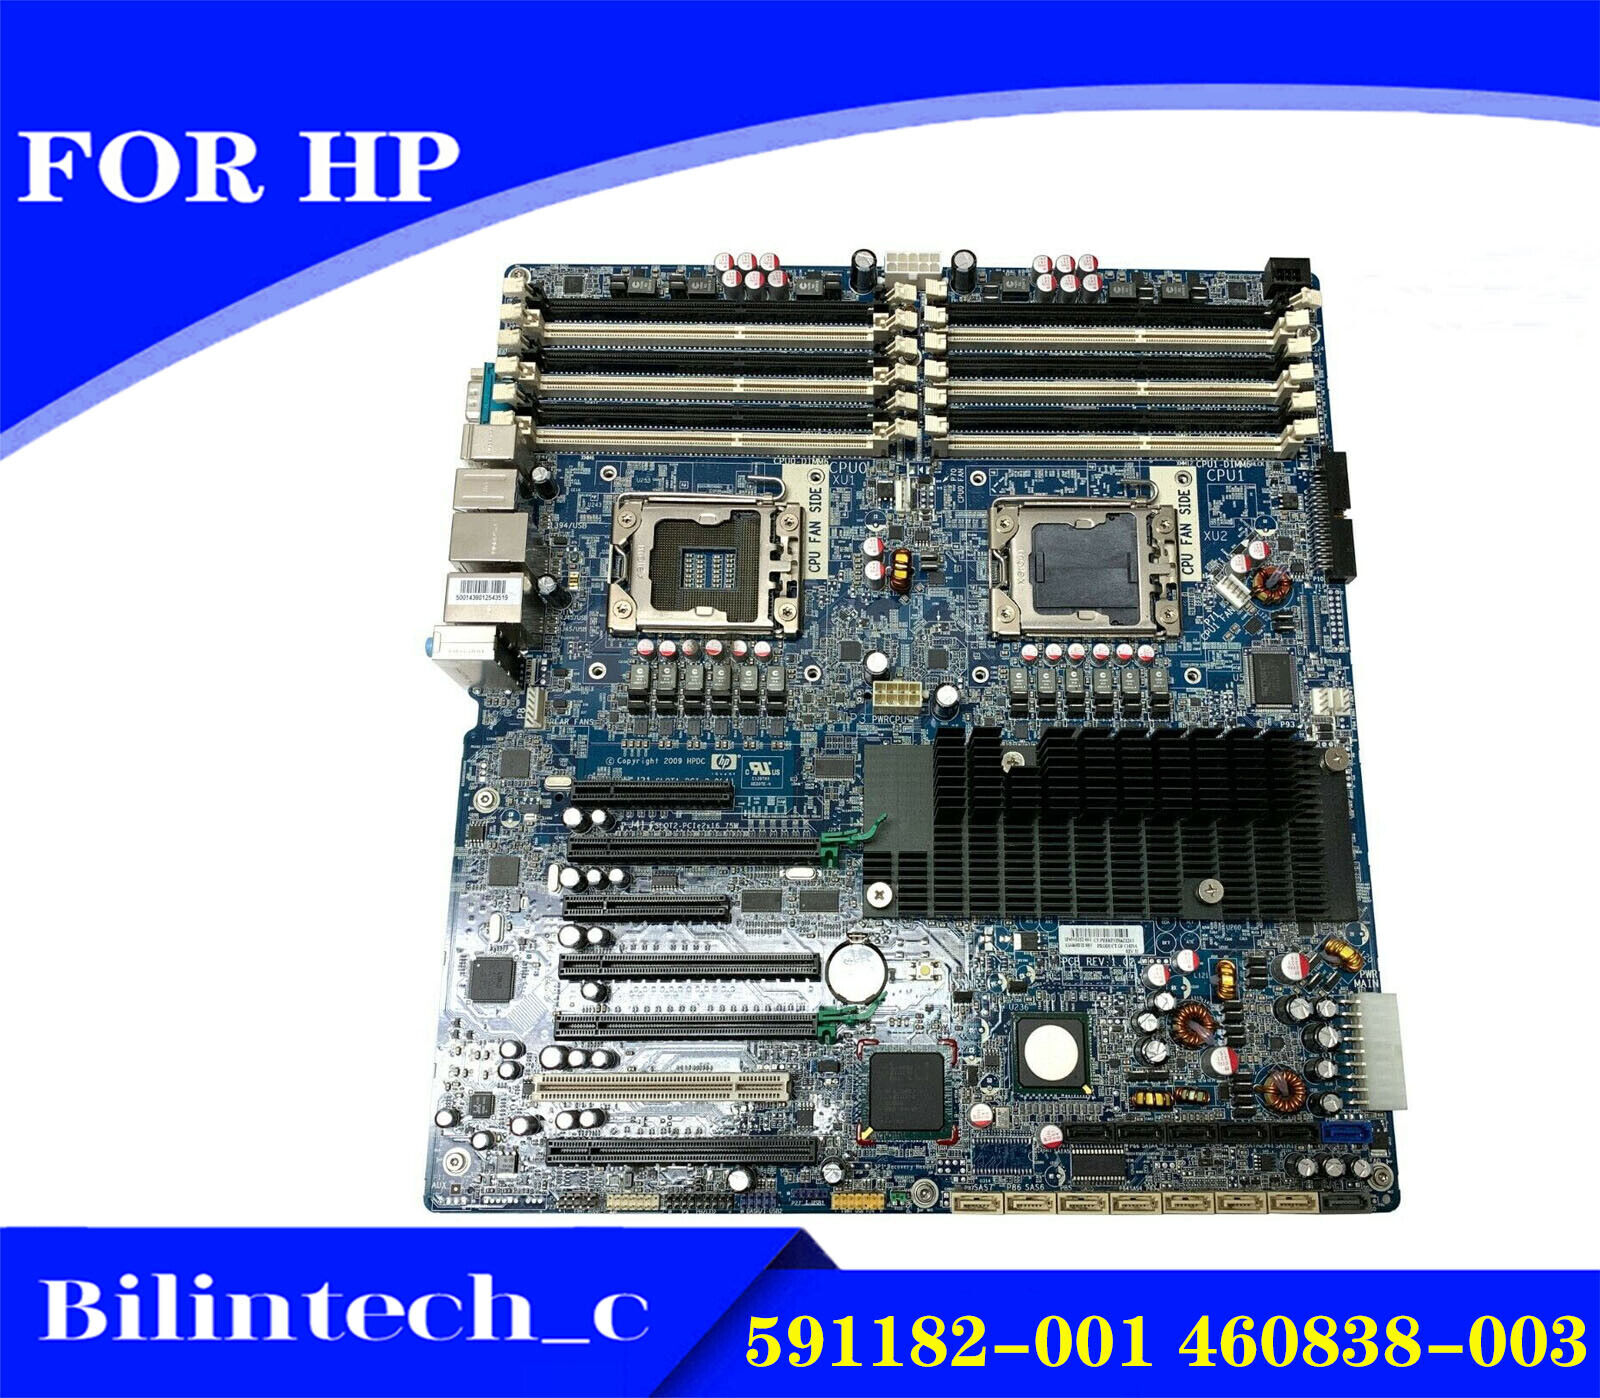 FOR HP Z800 Motherboard LGA 1366 591182-001 460838-003 LGA1366